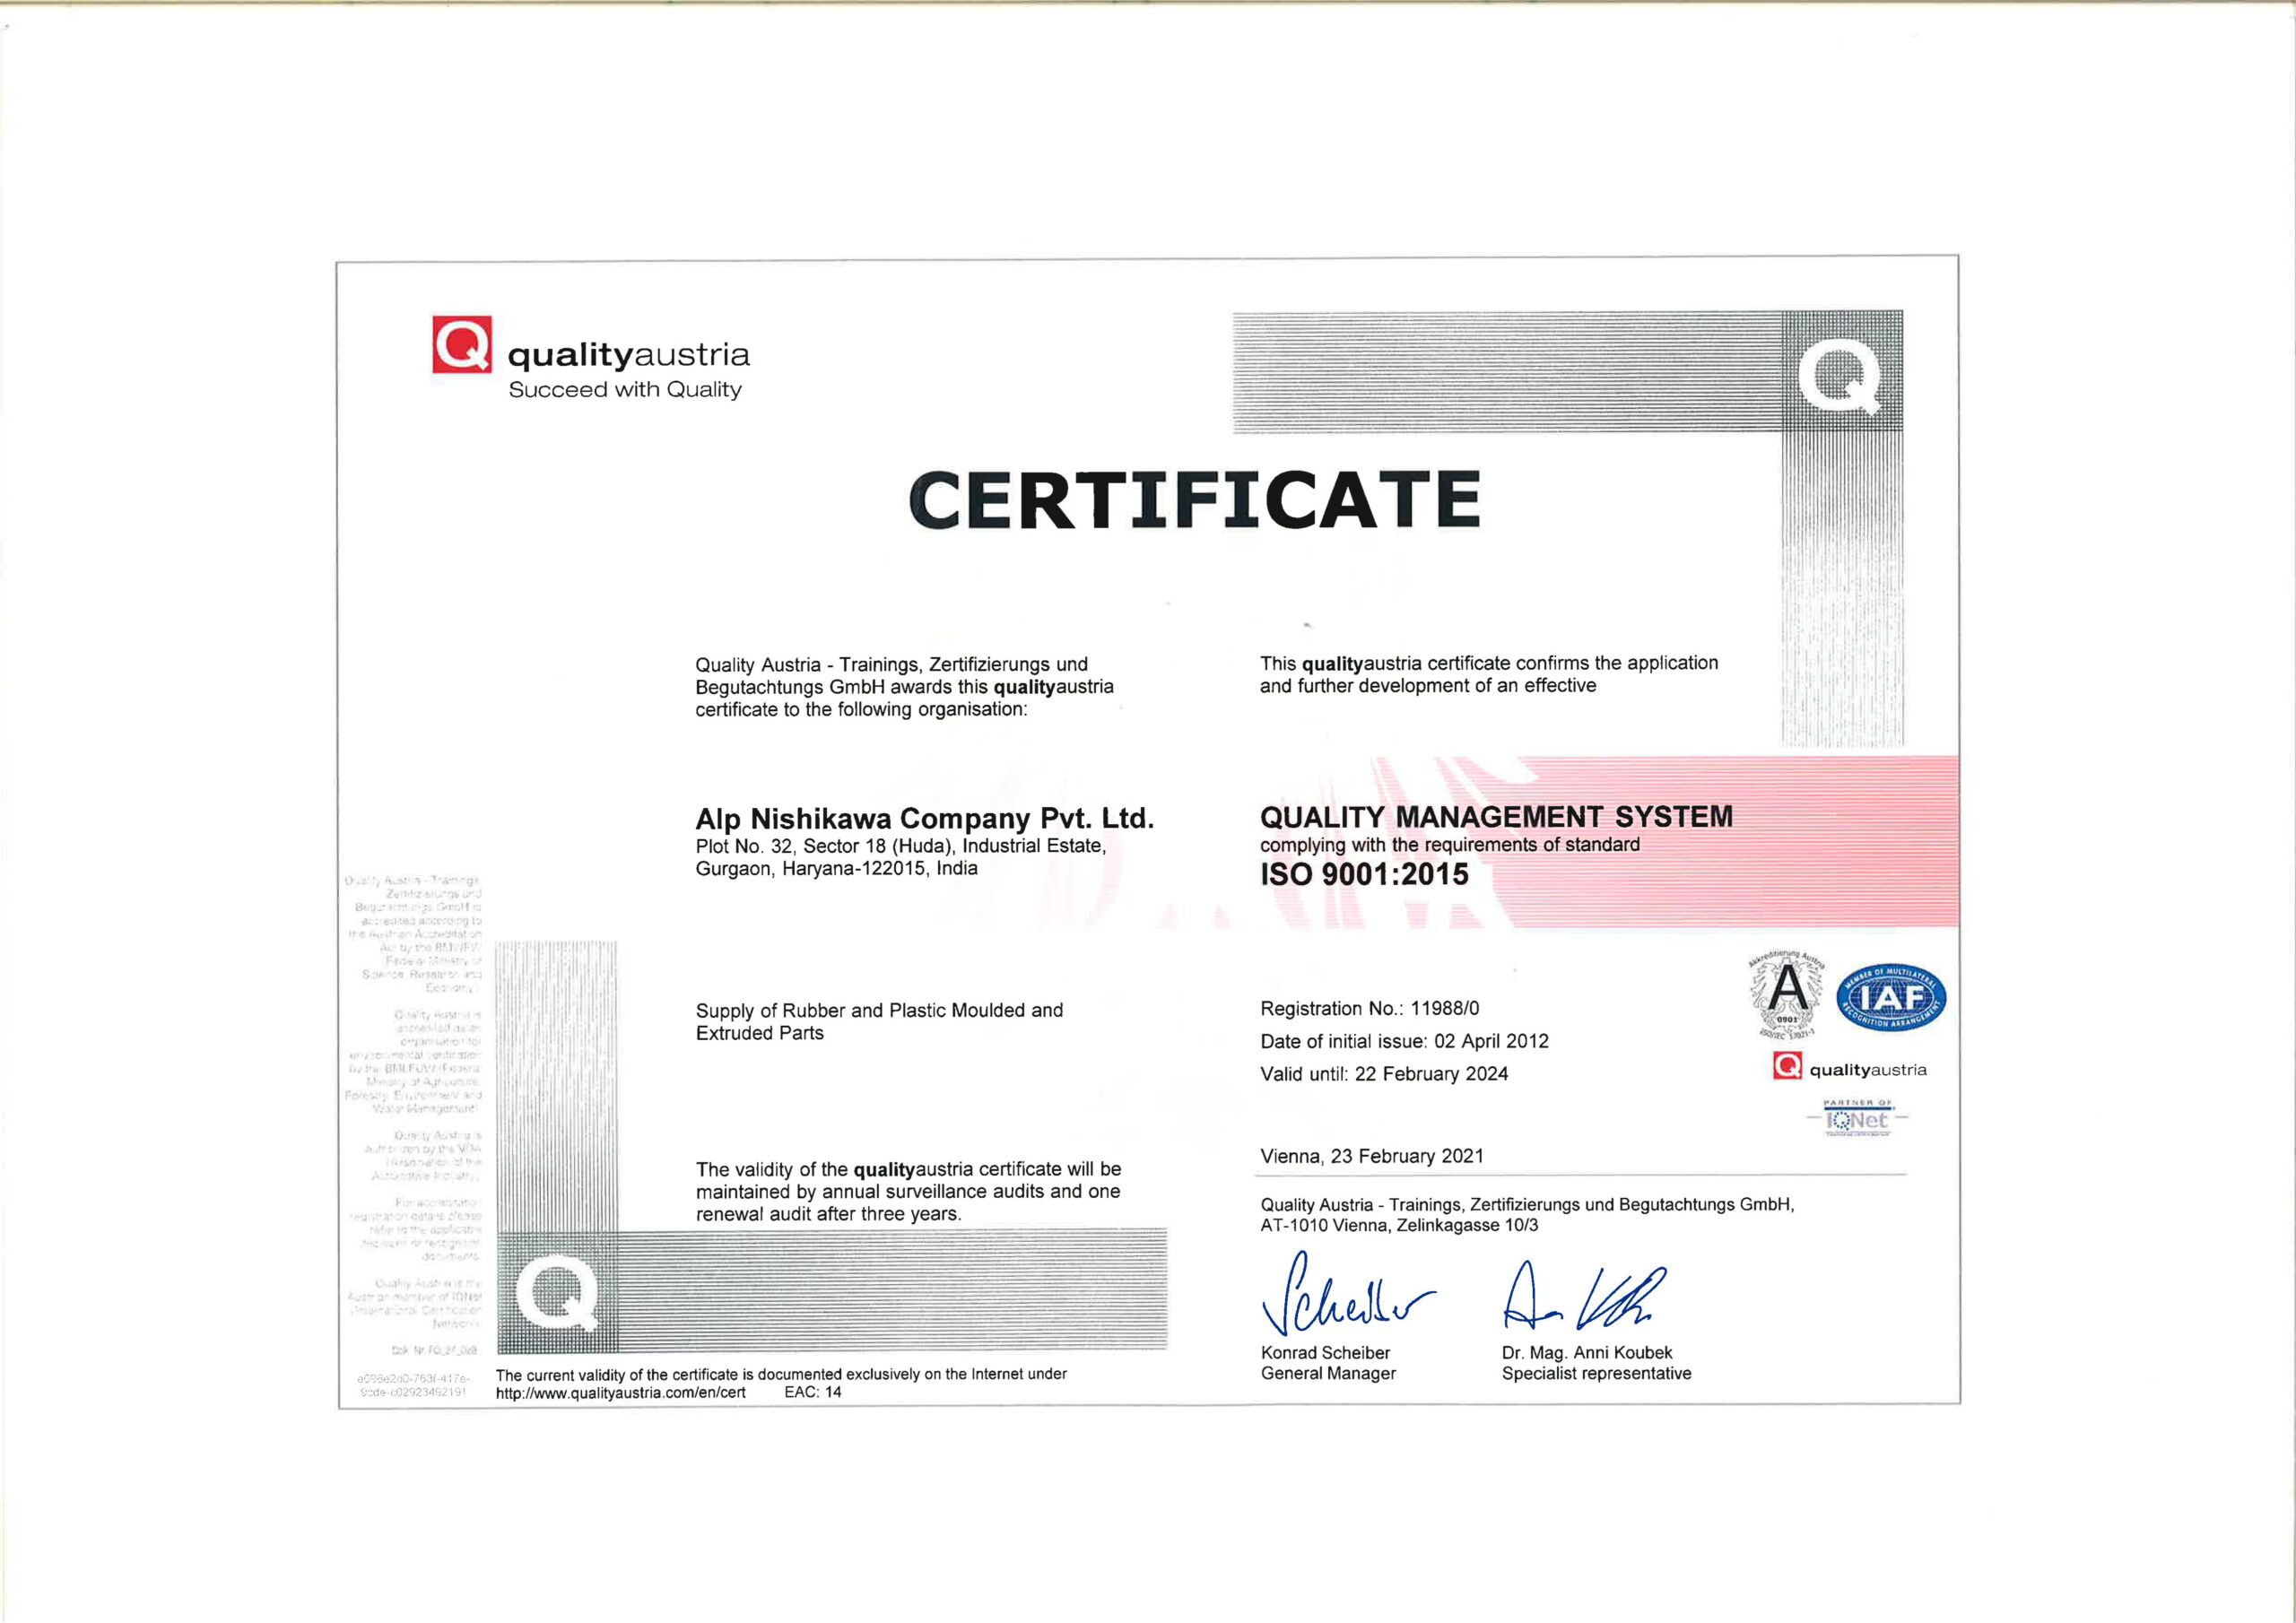 ISO 9001:2015 quality management system certificate awarded to ALP Nishikawa Company Pvt. Ltd. by qualityaustria.